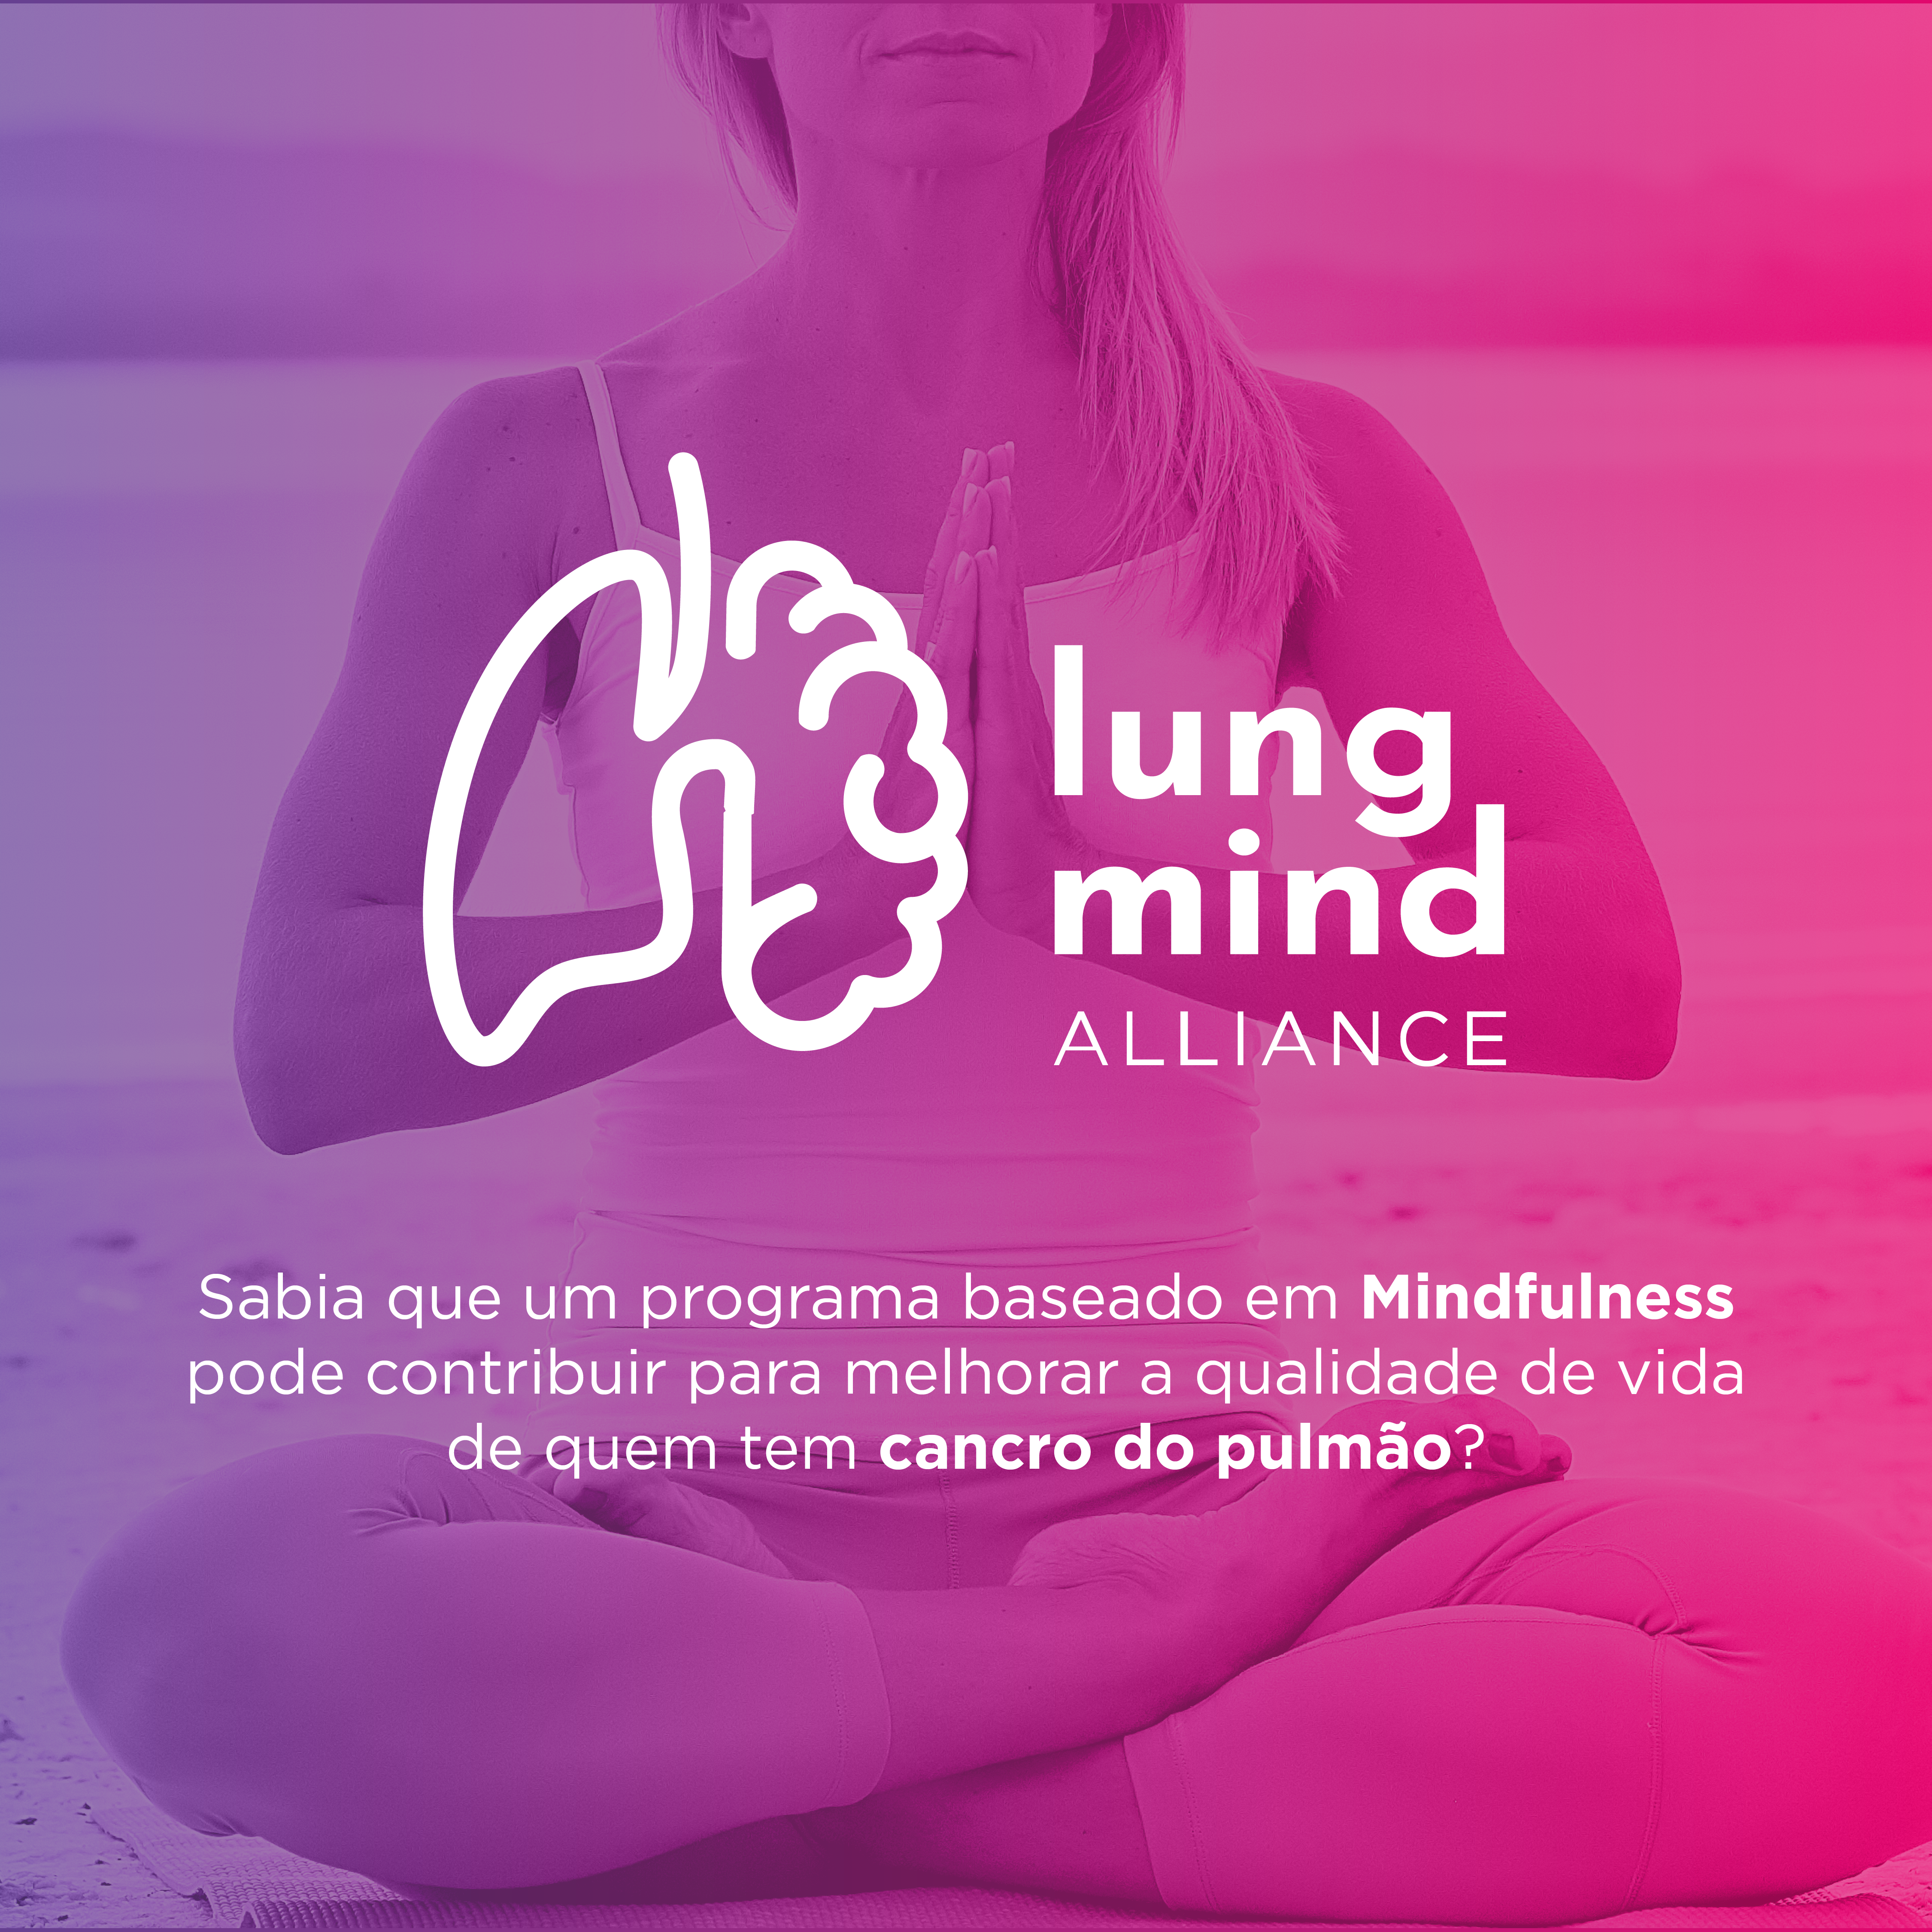 Programa MBSR - Lung Mind Alliance